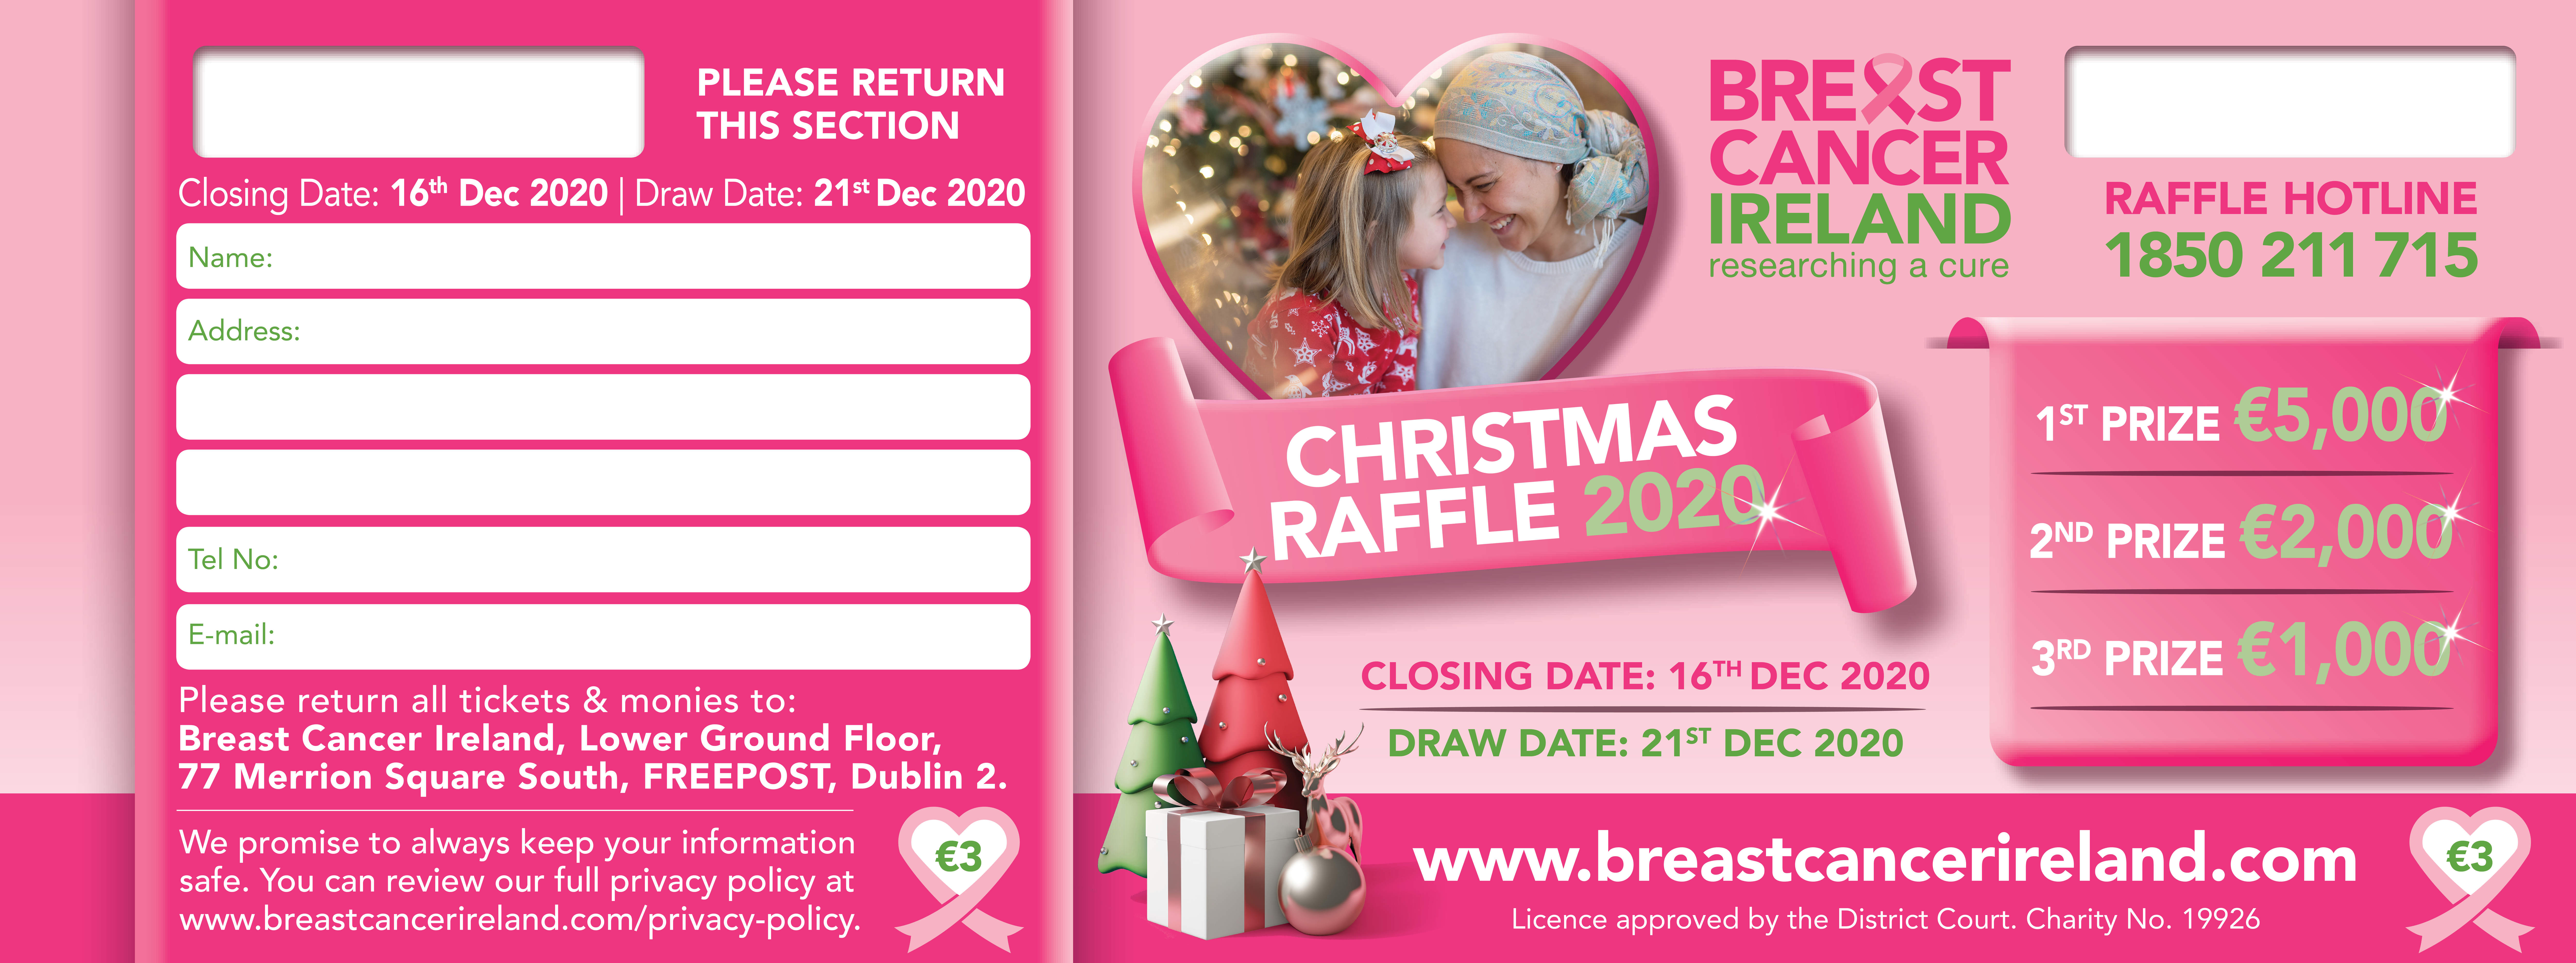 Breast Cancer Ireland Christmas Raffle 2020 Winners